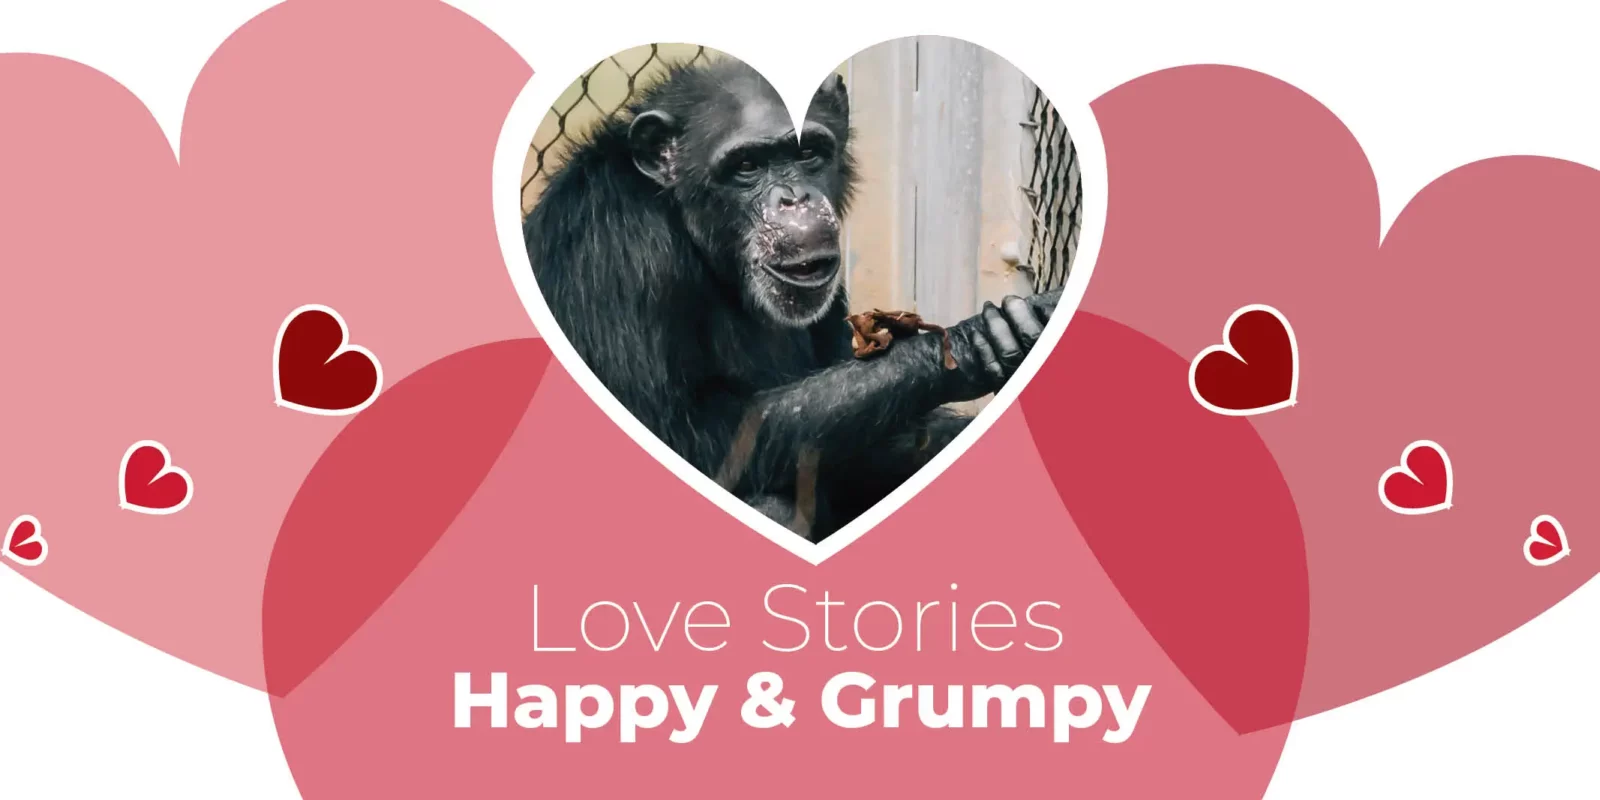 Love Stories: Happy & Grumpy